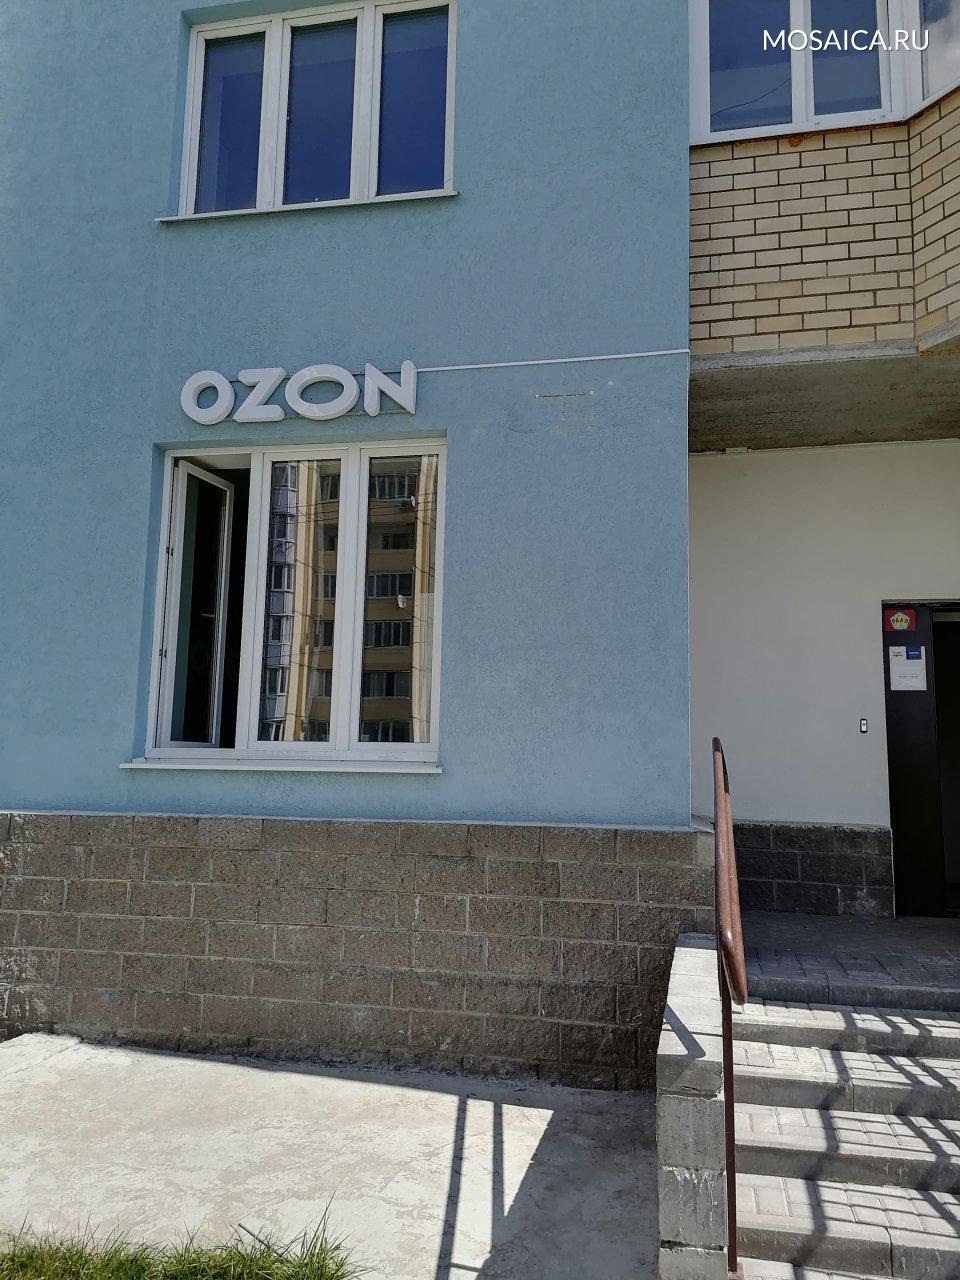 Ozon Ru Интернет Магазин Ульяновск